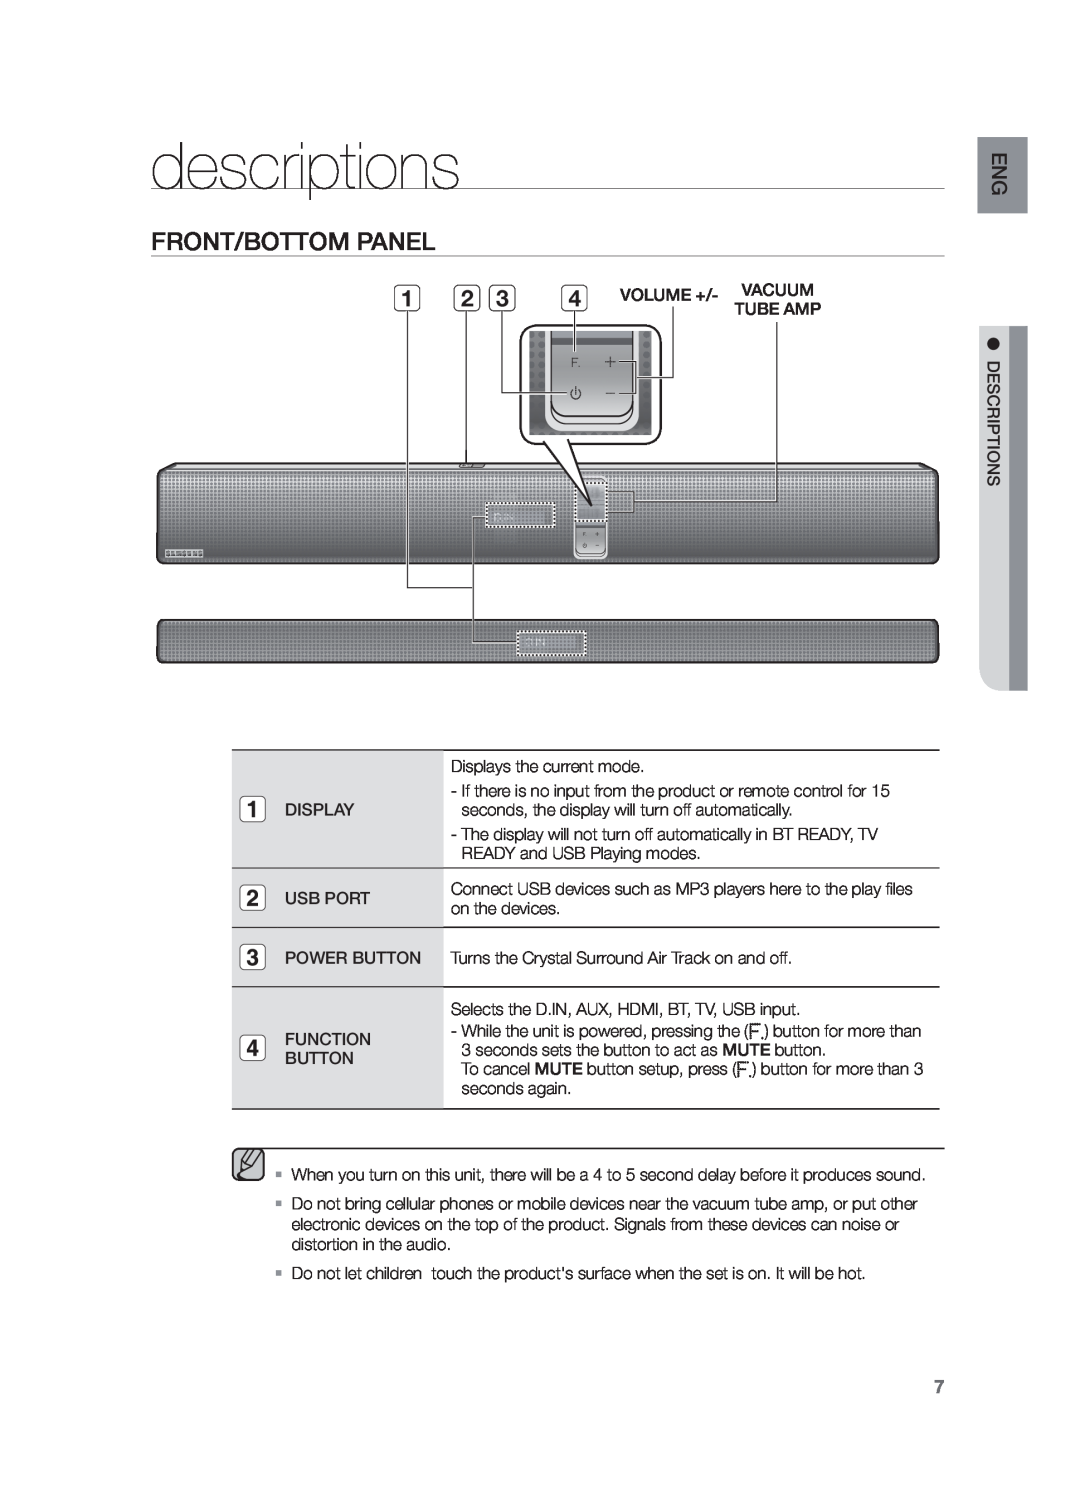 Samsung HW-F751/TK, HW-F751/XN, HW-F751/EN manual descriptions, Front/Bottom Panel 